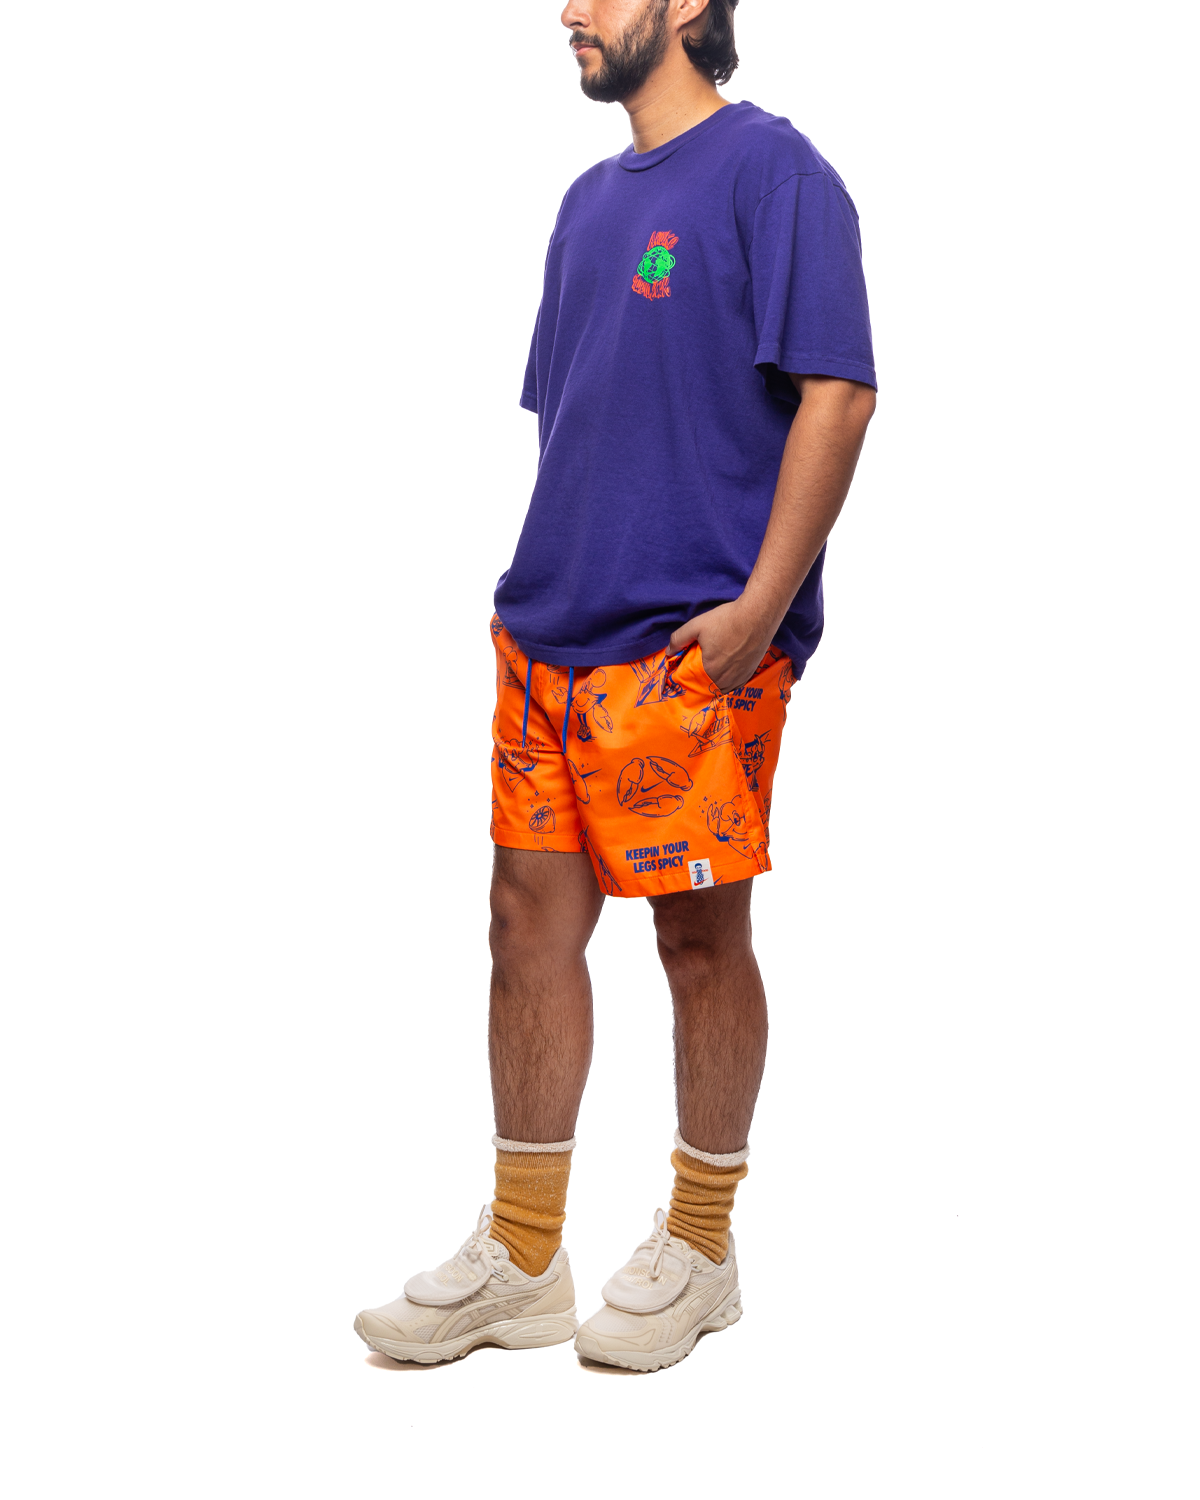 Club Shorts Total Orange